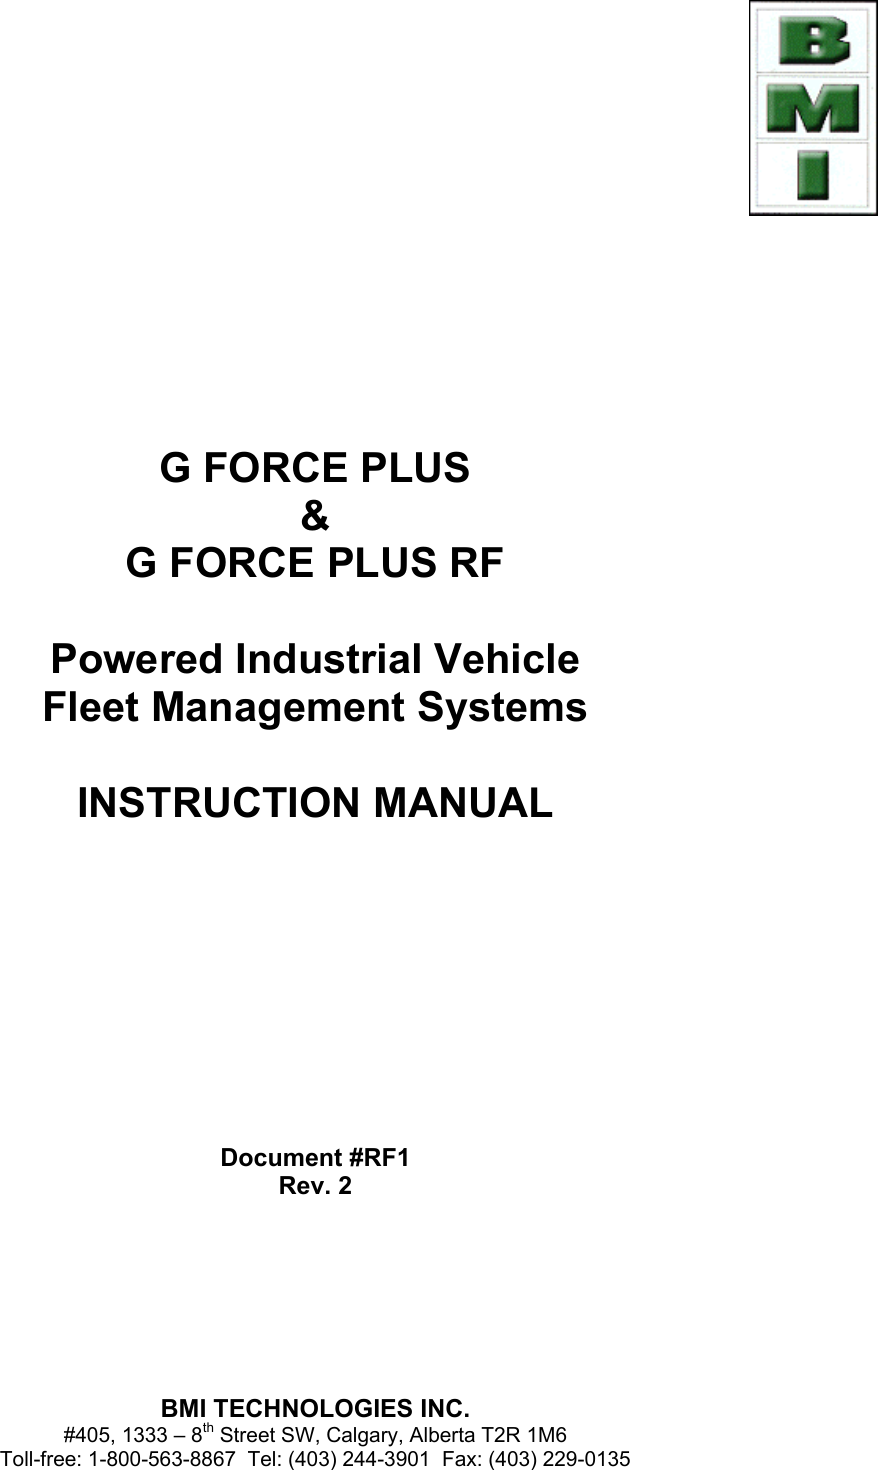  BMI TECHNOLOGIES INC. #405, 1333 – 8th Street SW, Calgary, Alberta T2R 1M6 Toll-free: 1-800-563-8867  Tel: (403) 244-3901  Fax: (403) 229-0135          G FORCE PLUS &amp; G FORCE PLUS RF  Powered Industrial Vehicle Fleet Management Systems  INSTRUCTION MANUAL            Document #RF1 Rev. 2       